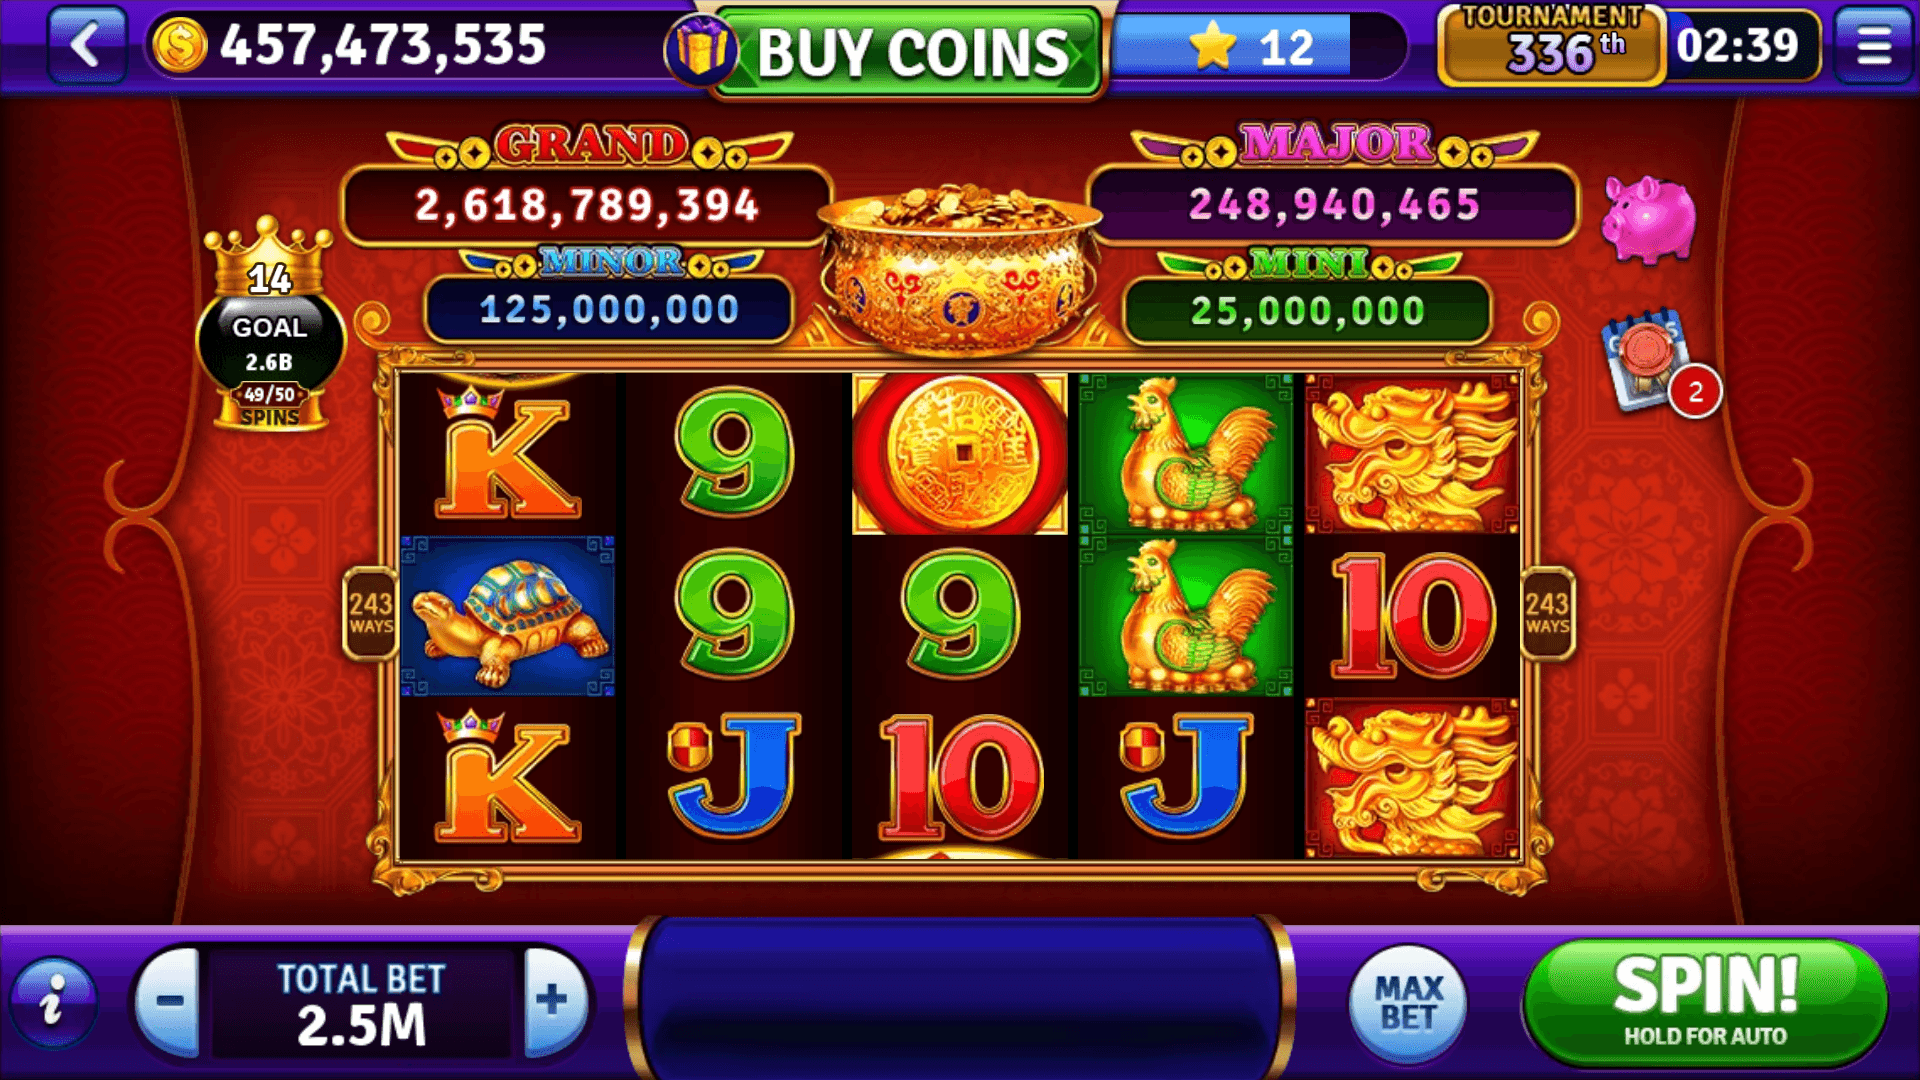 Jackpot Free Slots